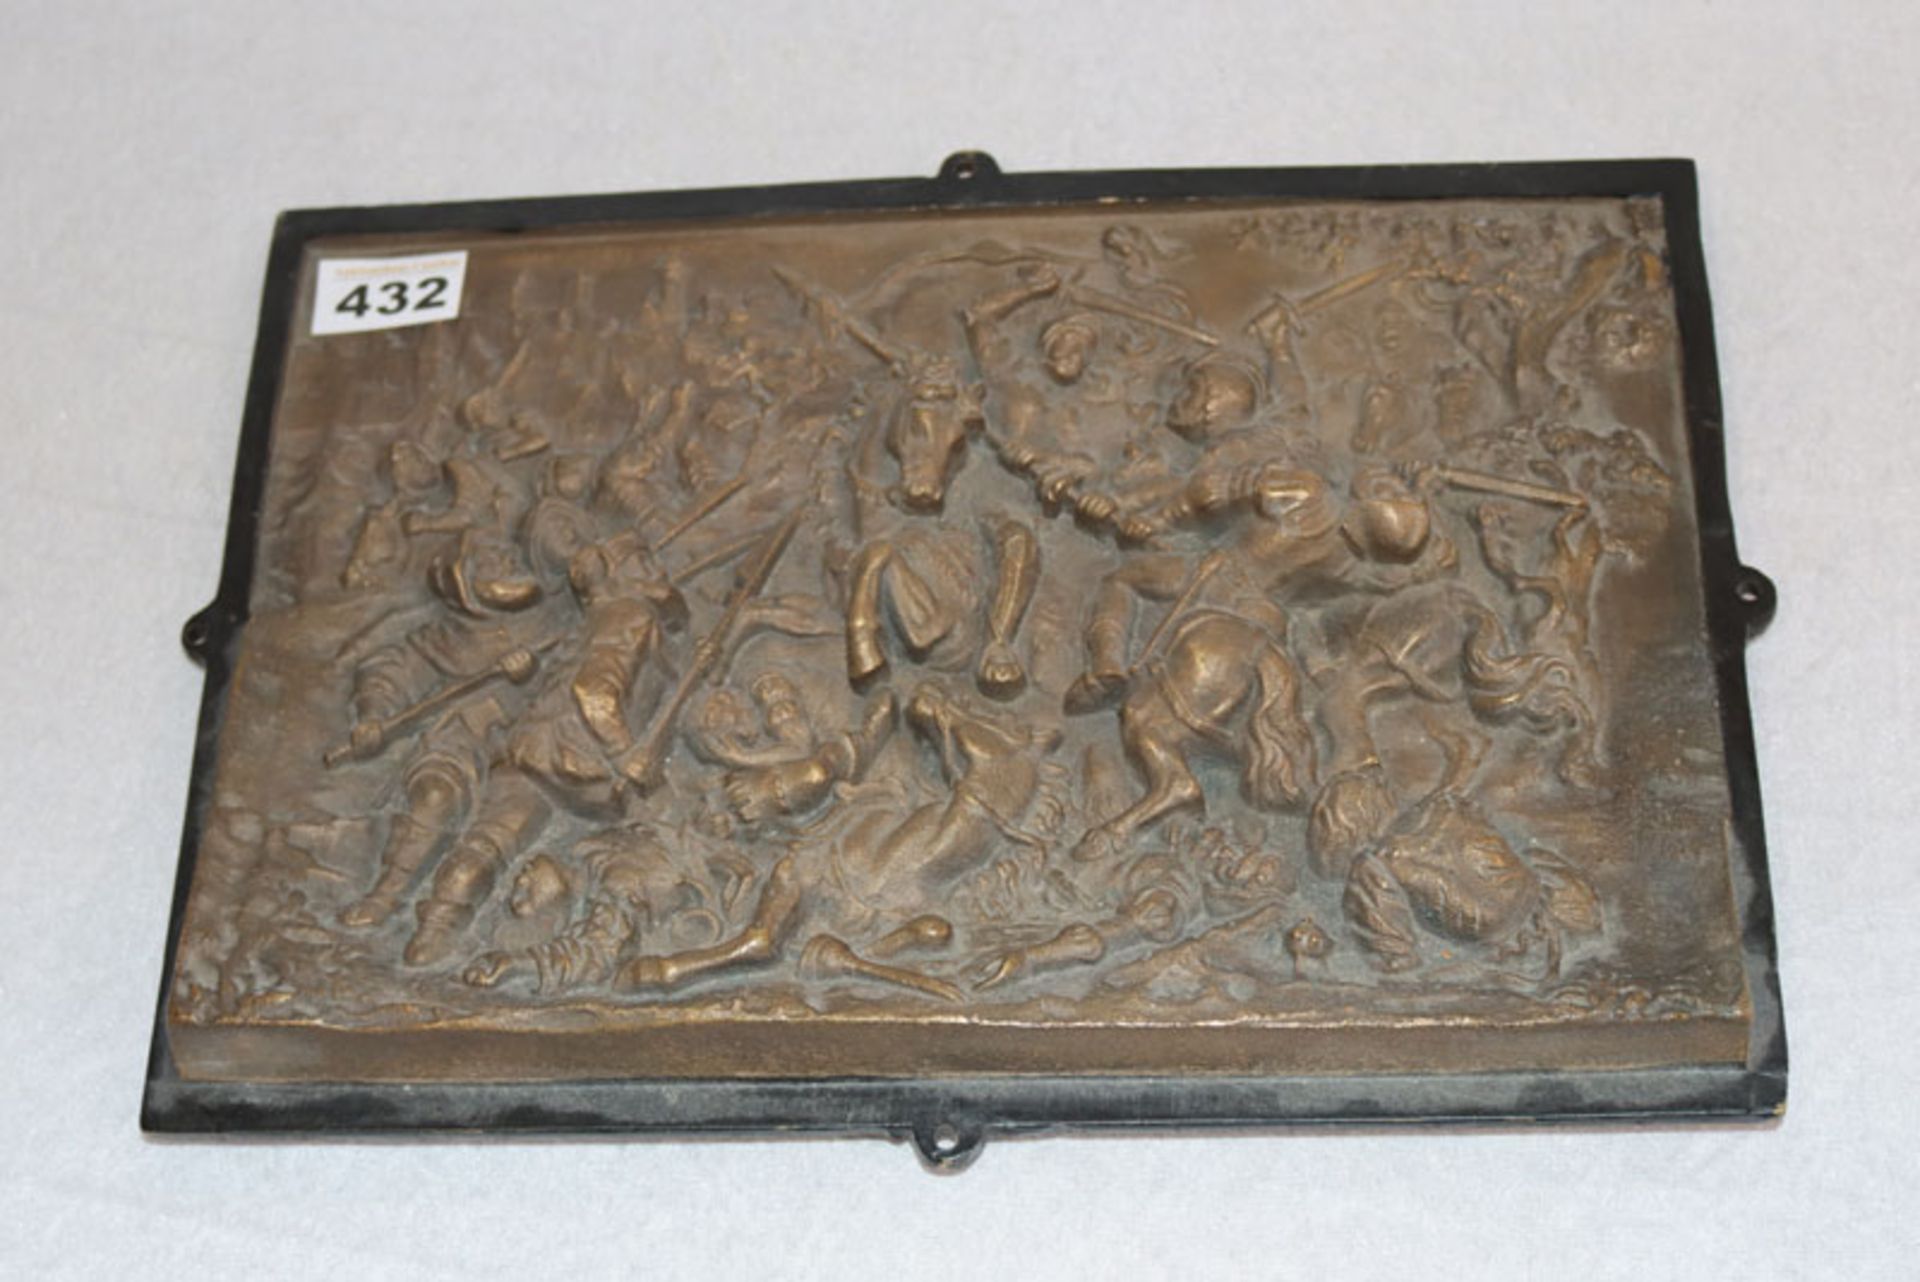 Messing Gußplatte mit Reliefdekor 'Kampfszene', massive Arbeit, 24 cm x 36 cm, Altersspuren